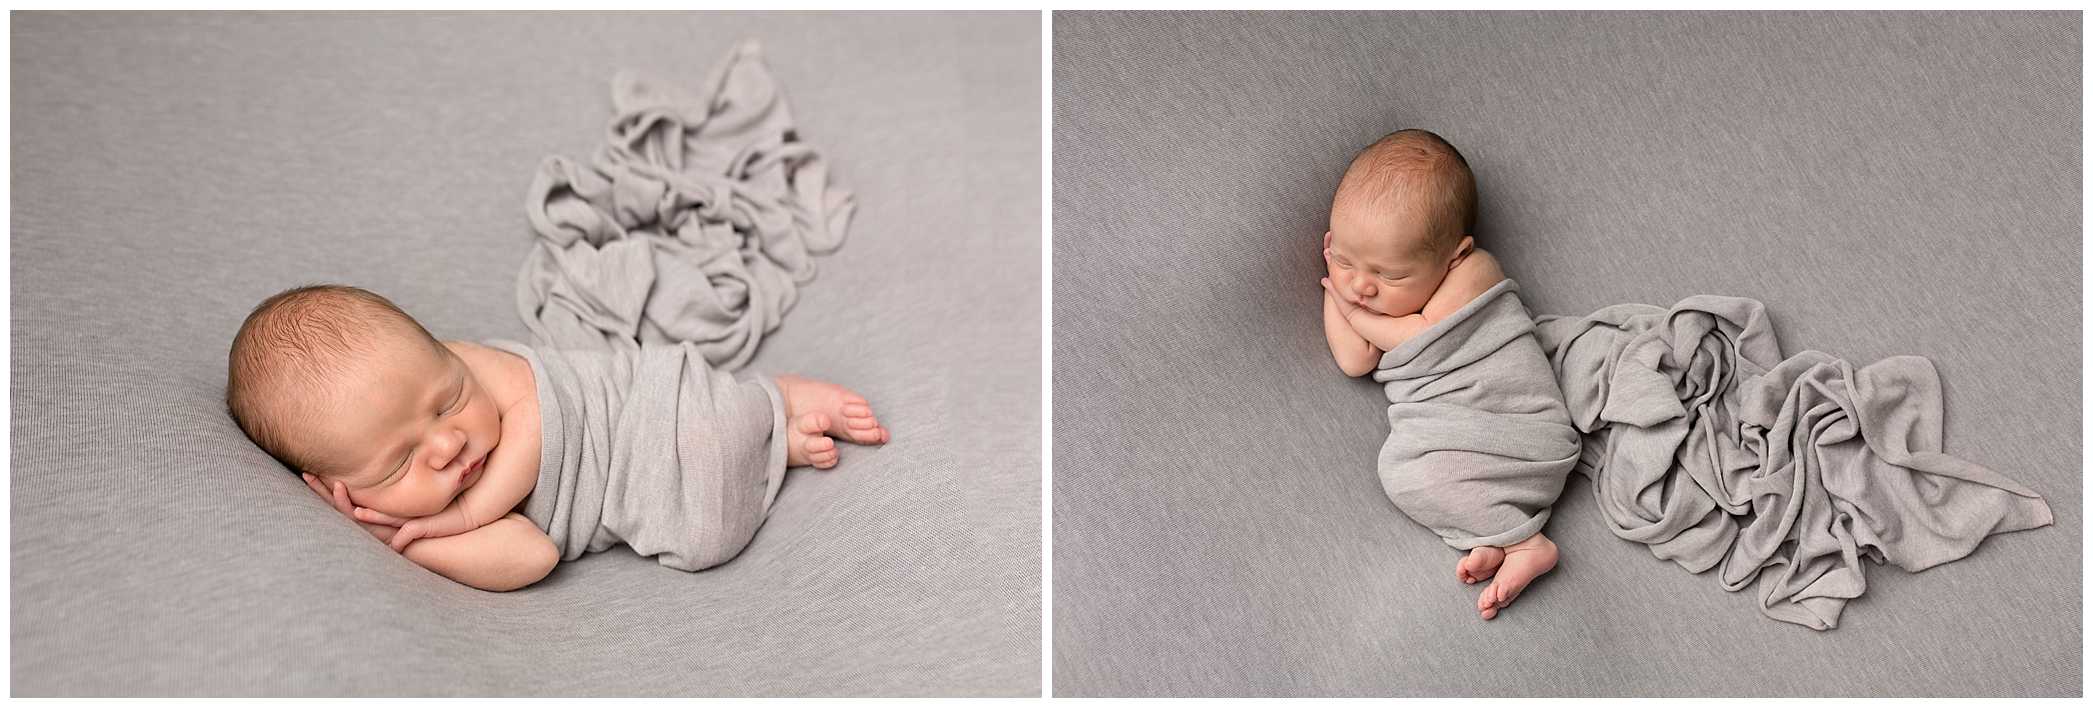 Example of newborn photography side pose by Lynne Harper newborn photographer